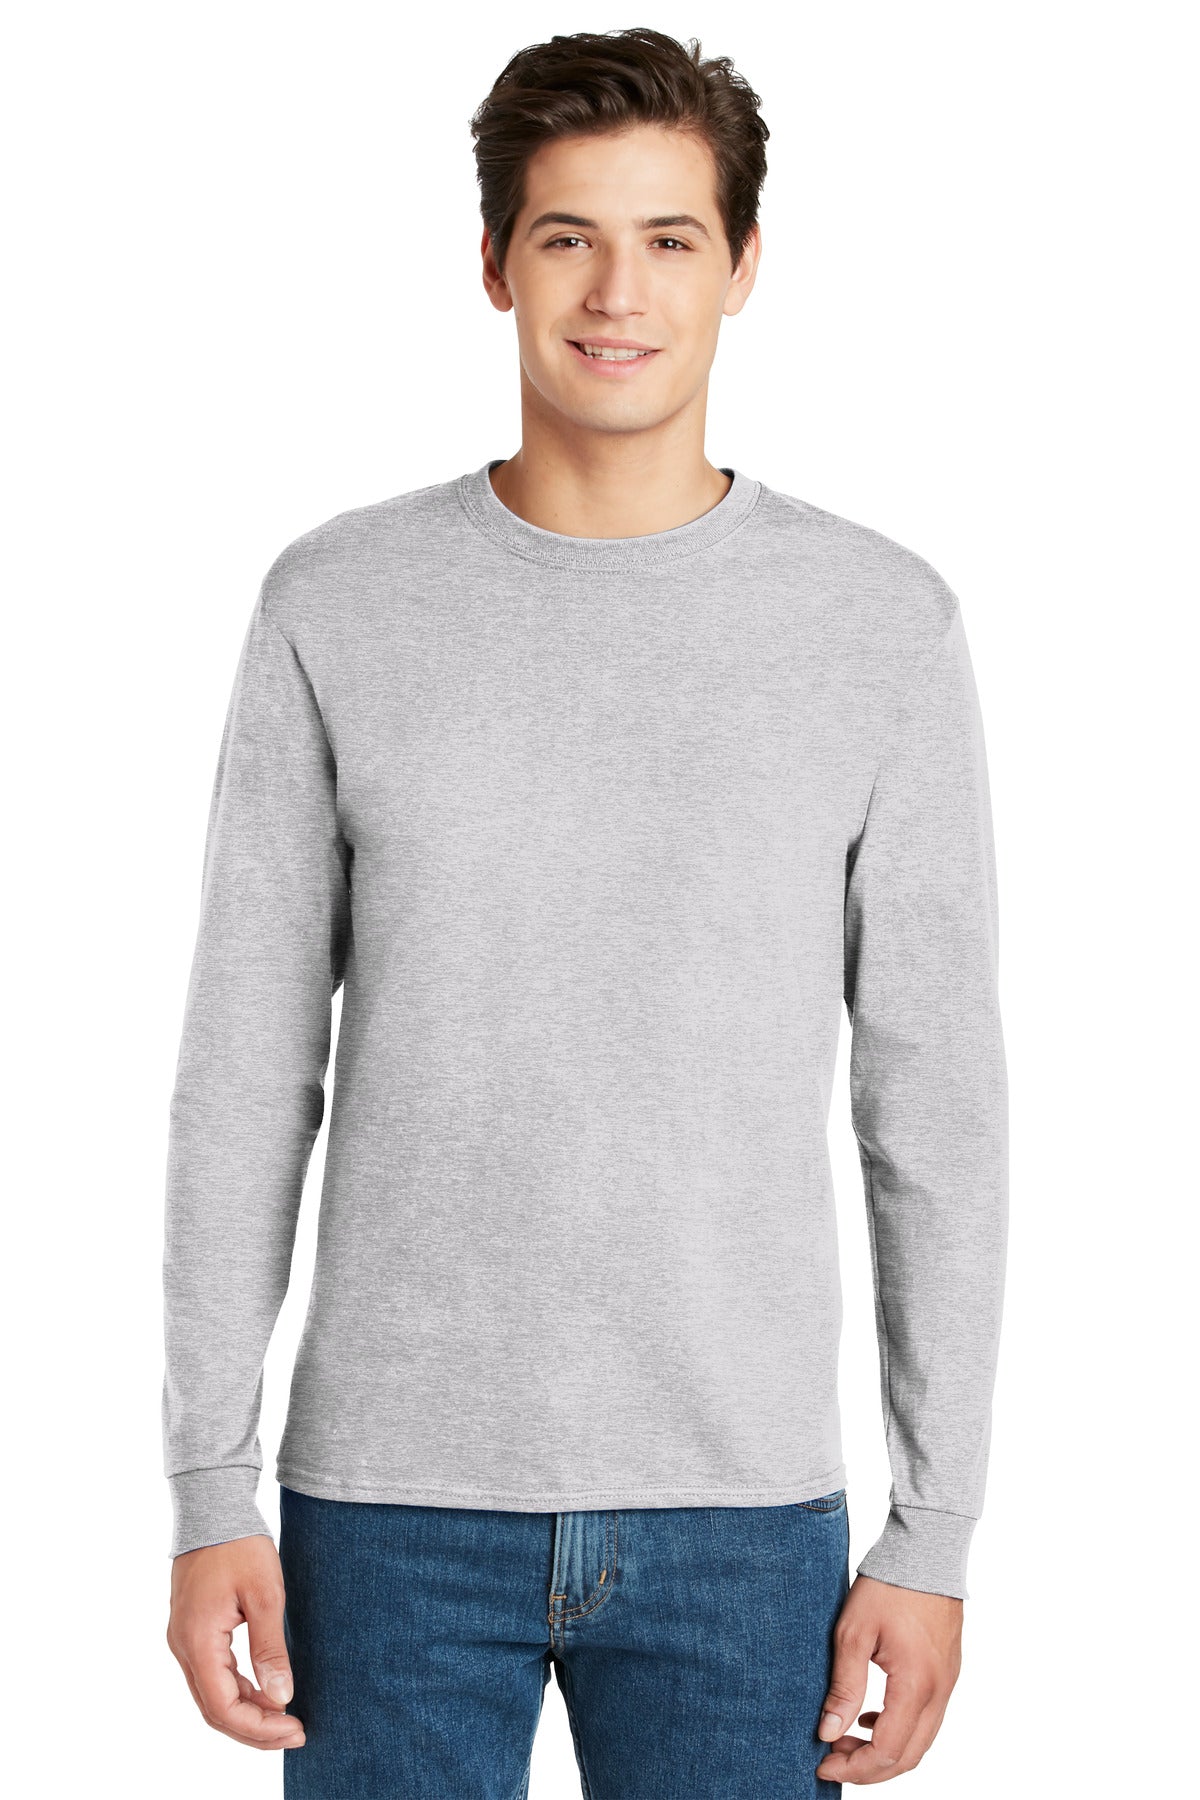 Hanes® - Authentic 100% Cotton Long Sleeve T-Shirt. 5586 - DFW Impression